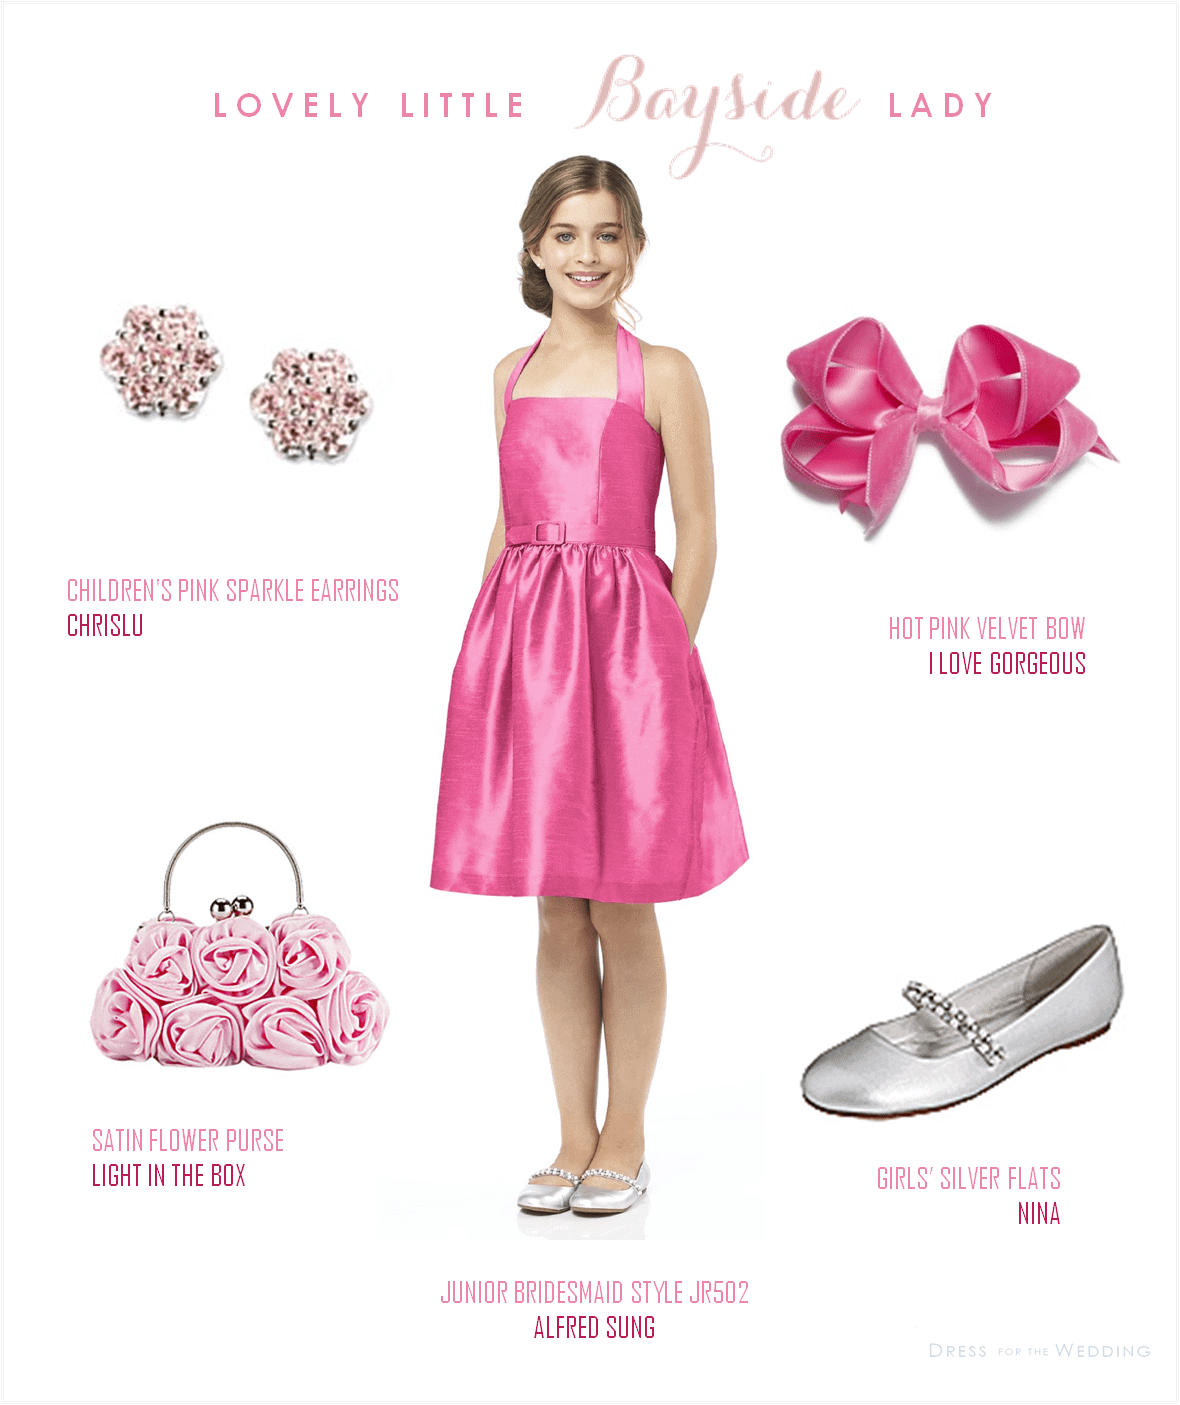 light pink junior bridesmaid dresses